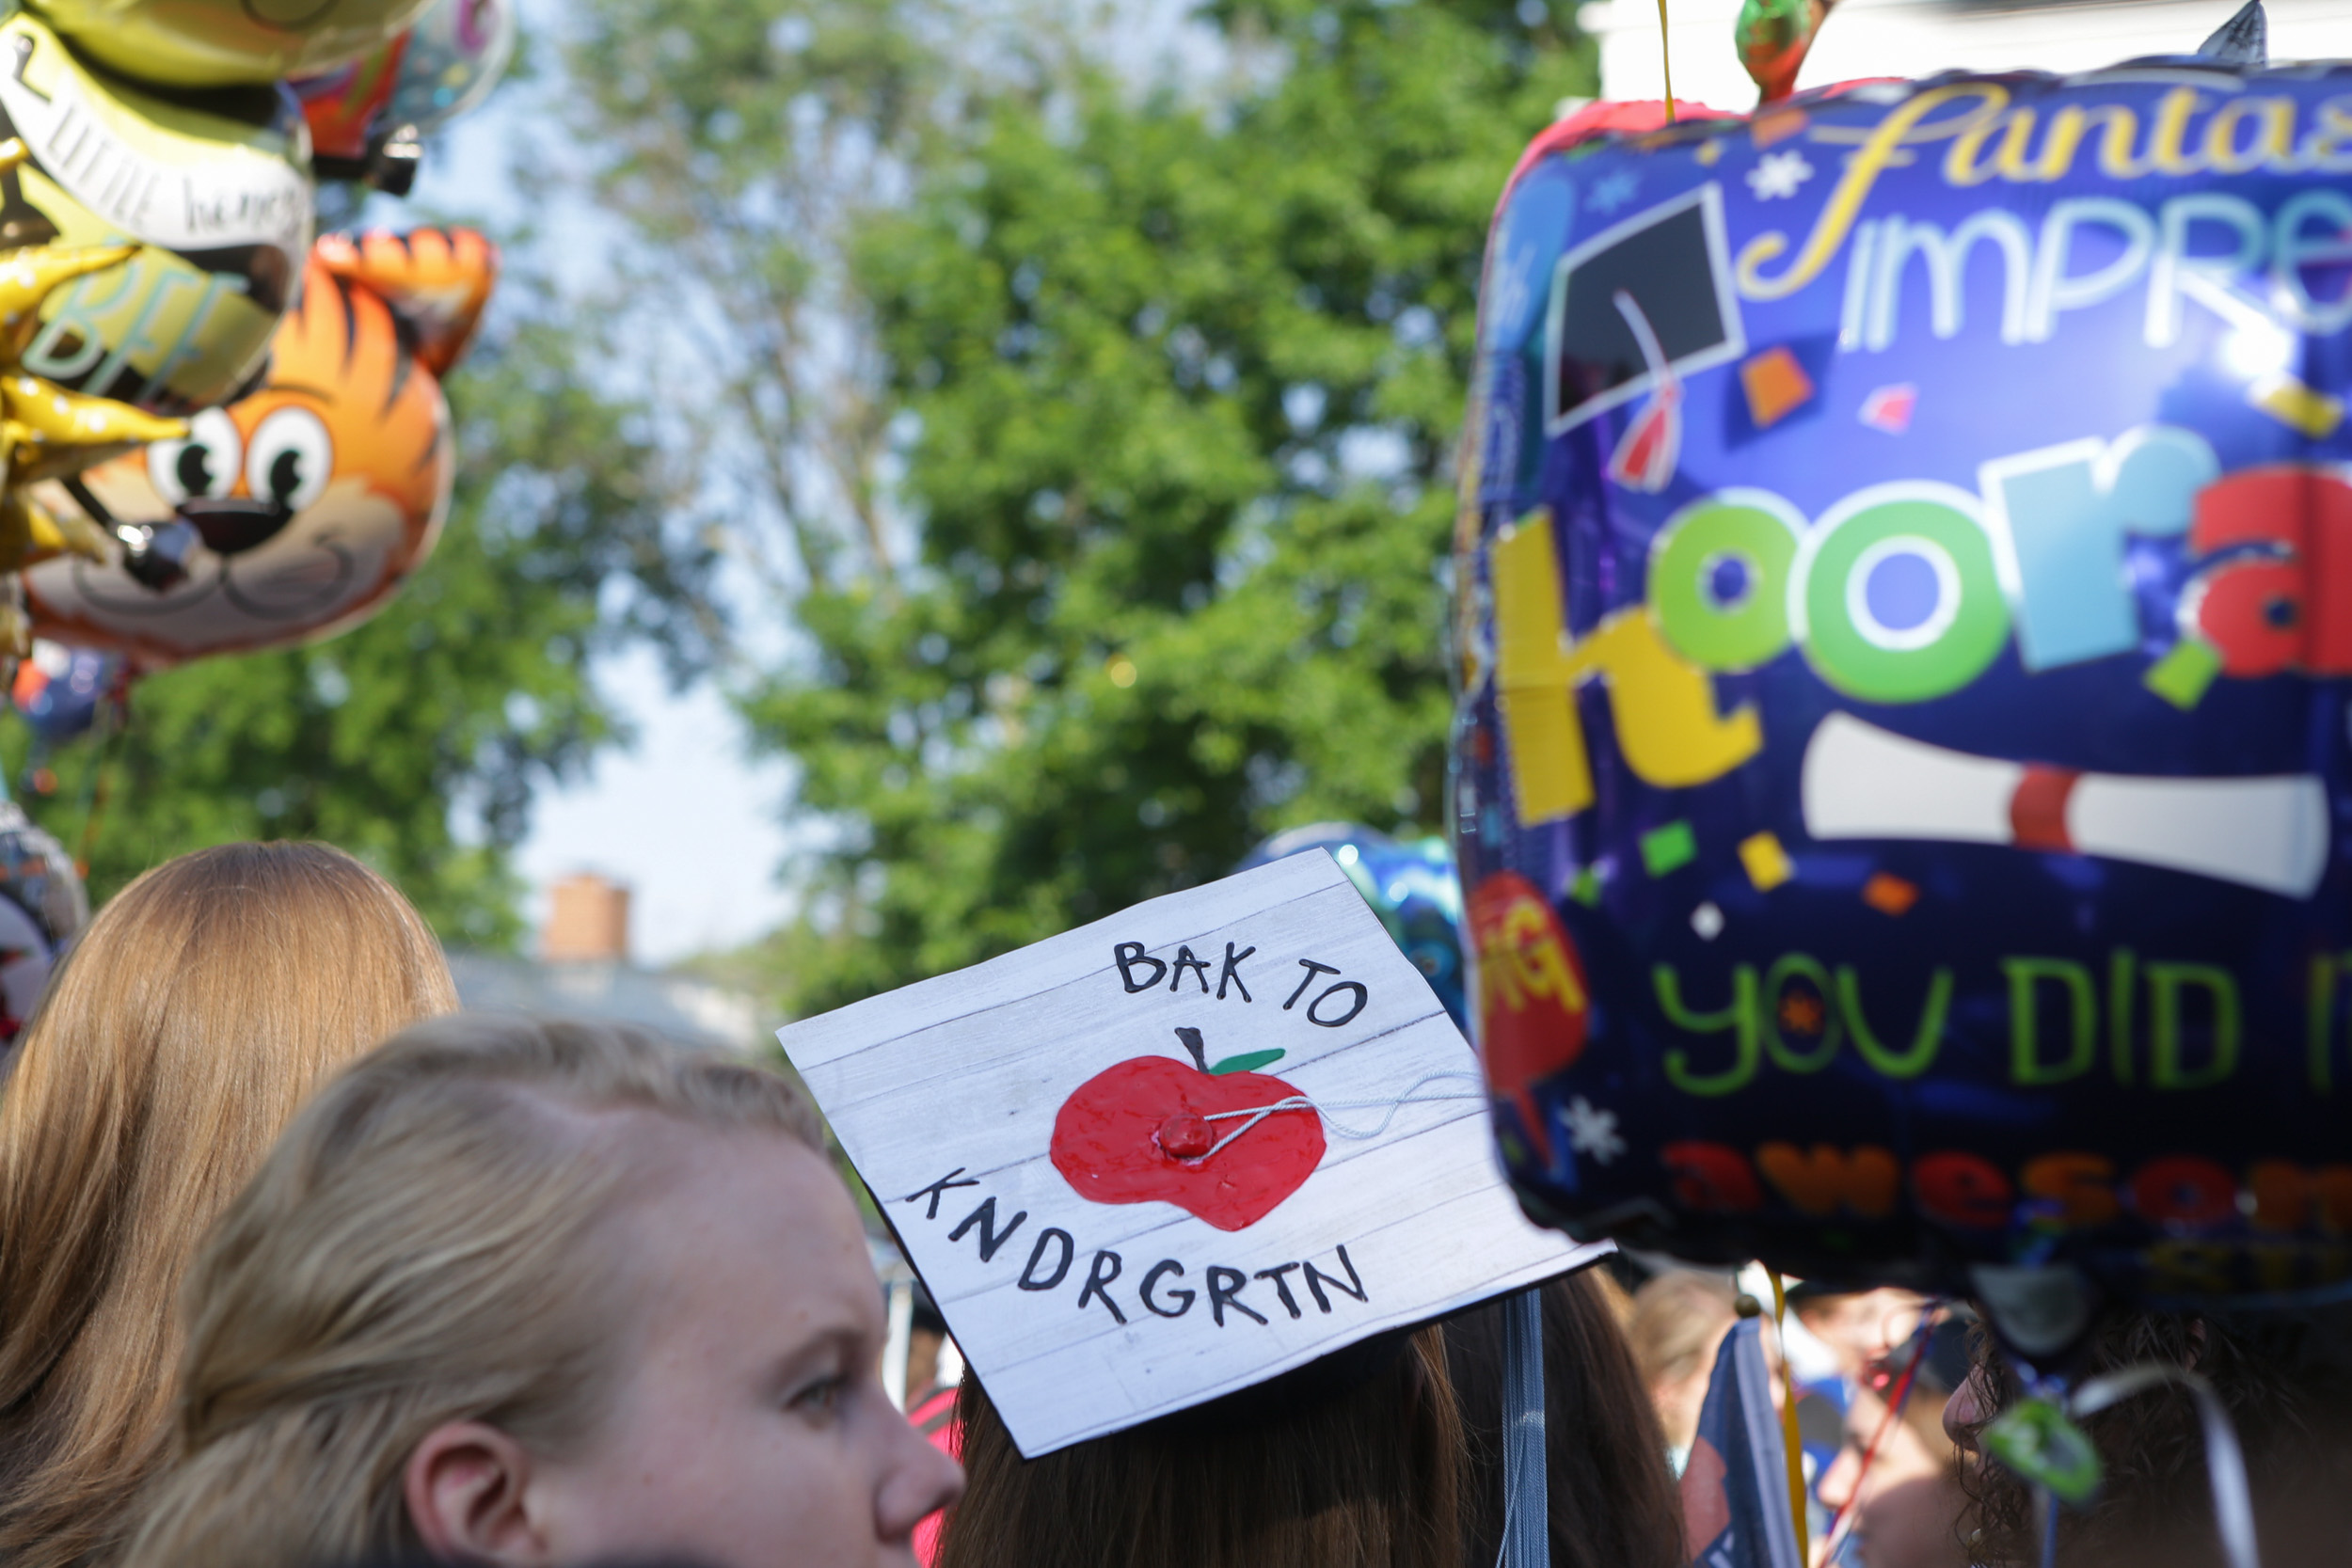 Graduation cap reads: Bak to Kndrgrtn (back to kindergarten)